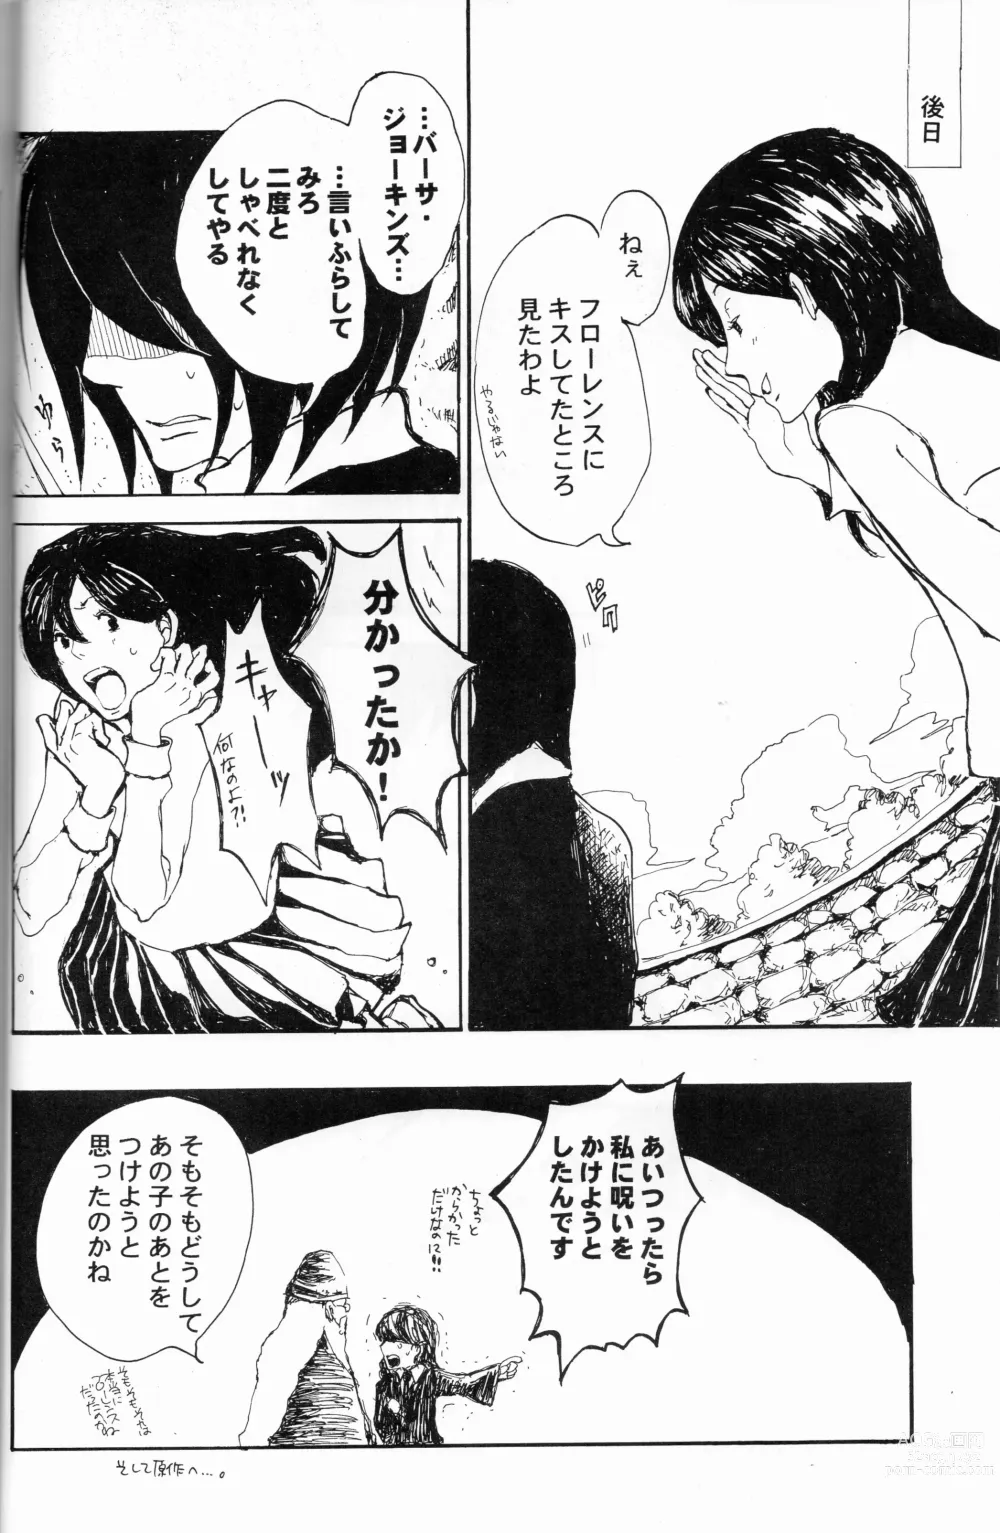 Page 19 of doujinshi 44